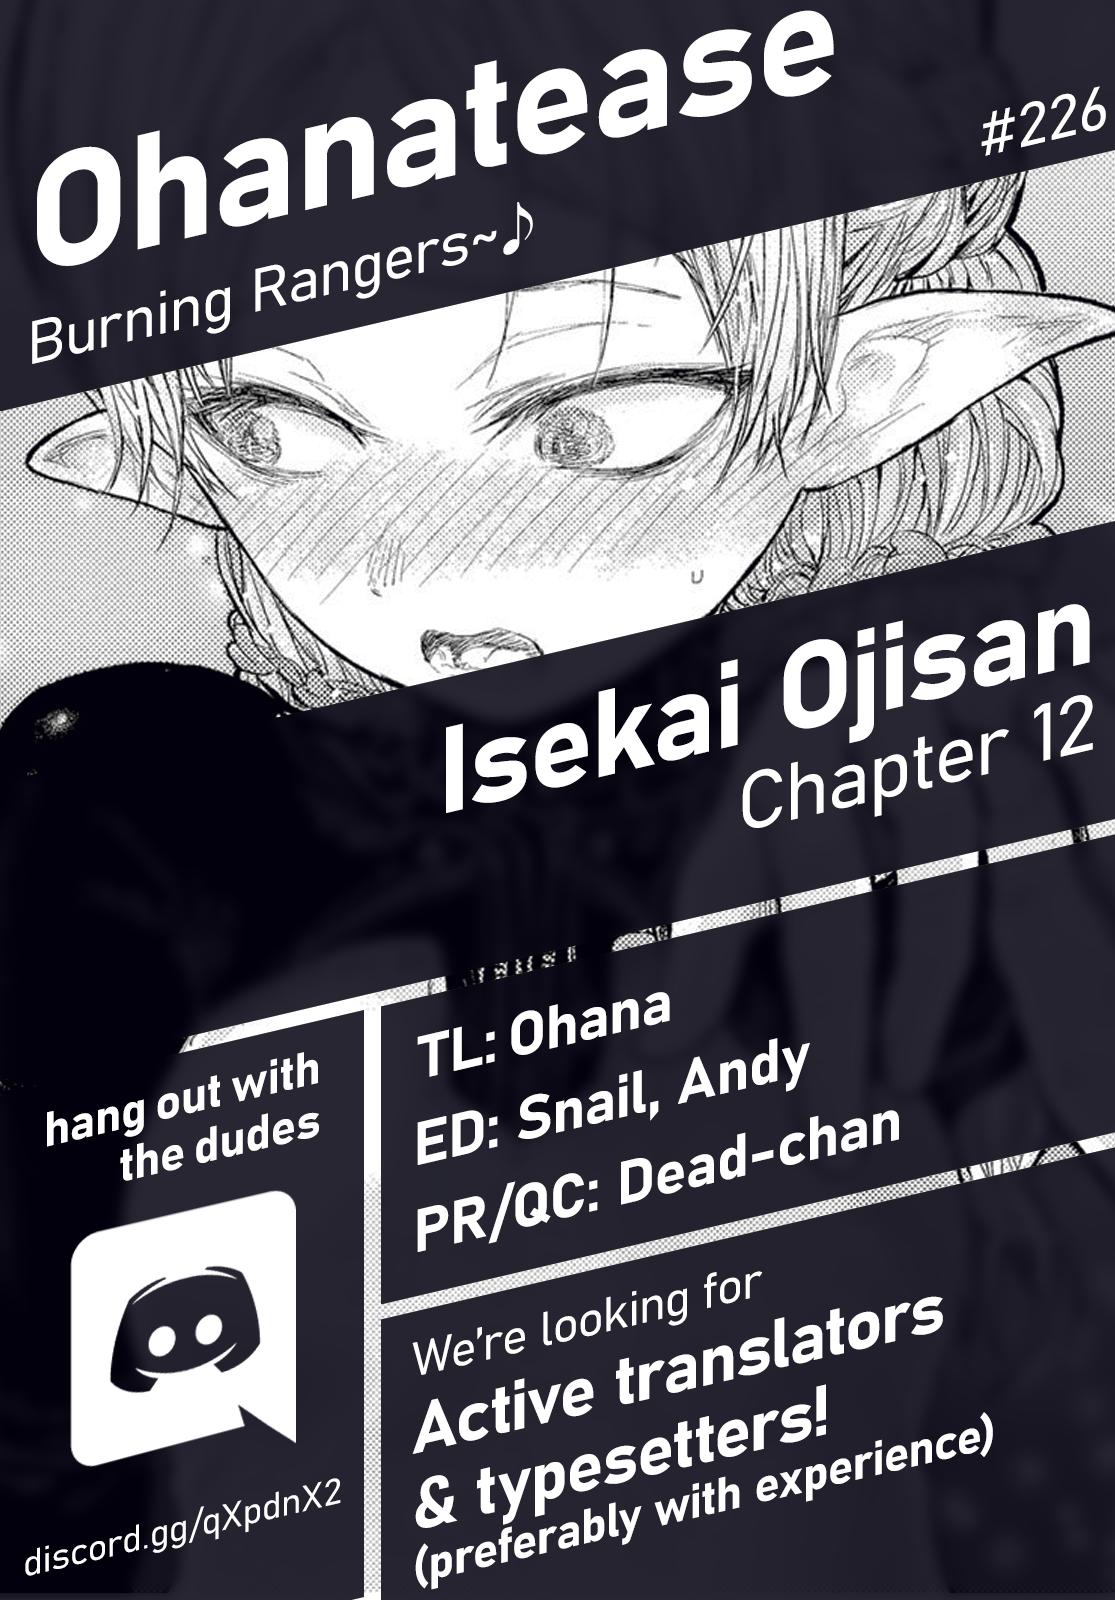 Read Isekai Ojisan Chapter 35 on Mangakakalot